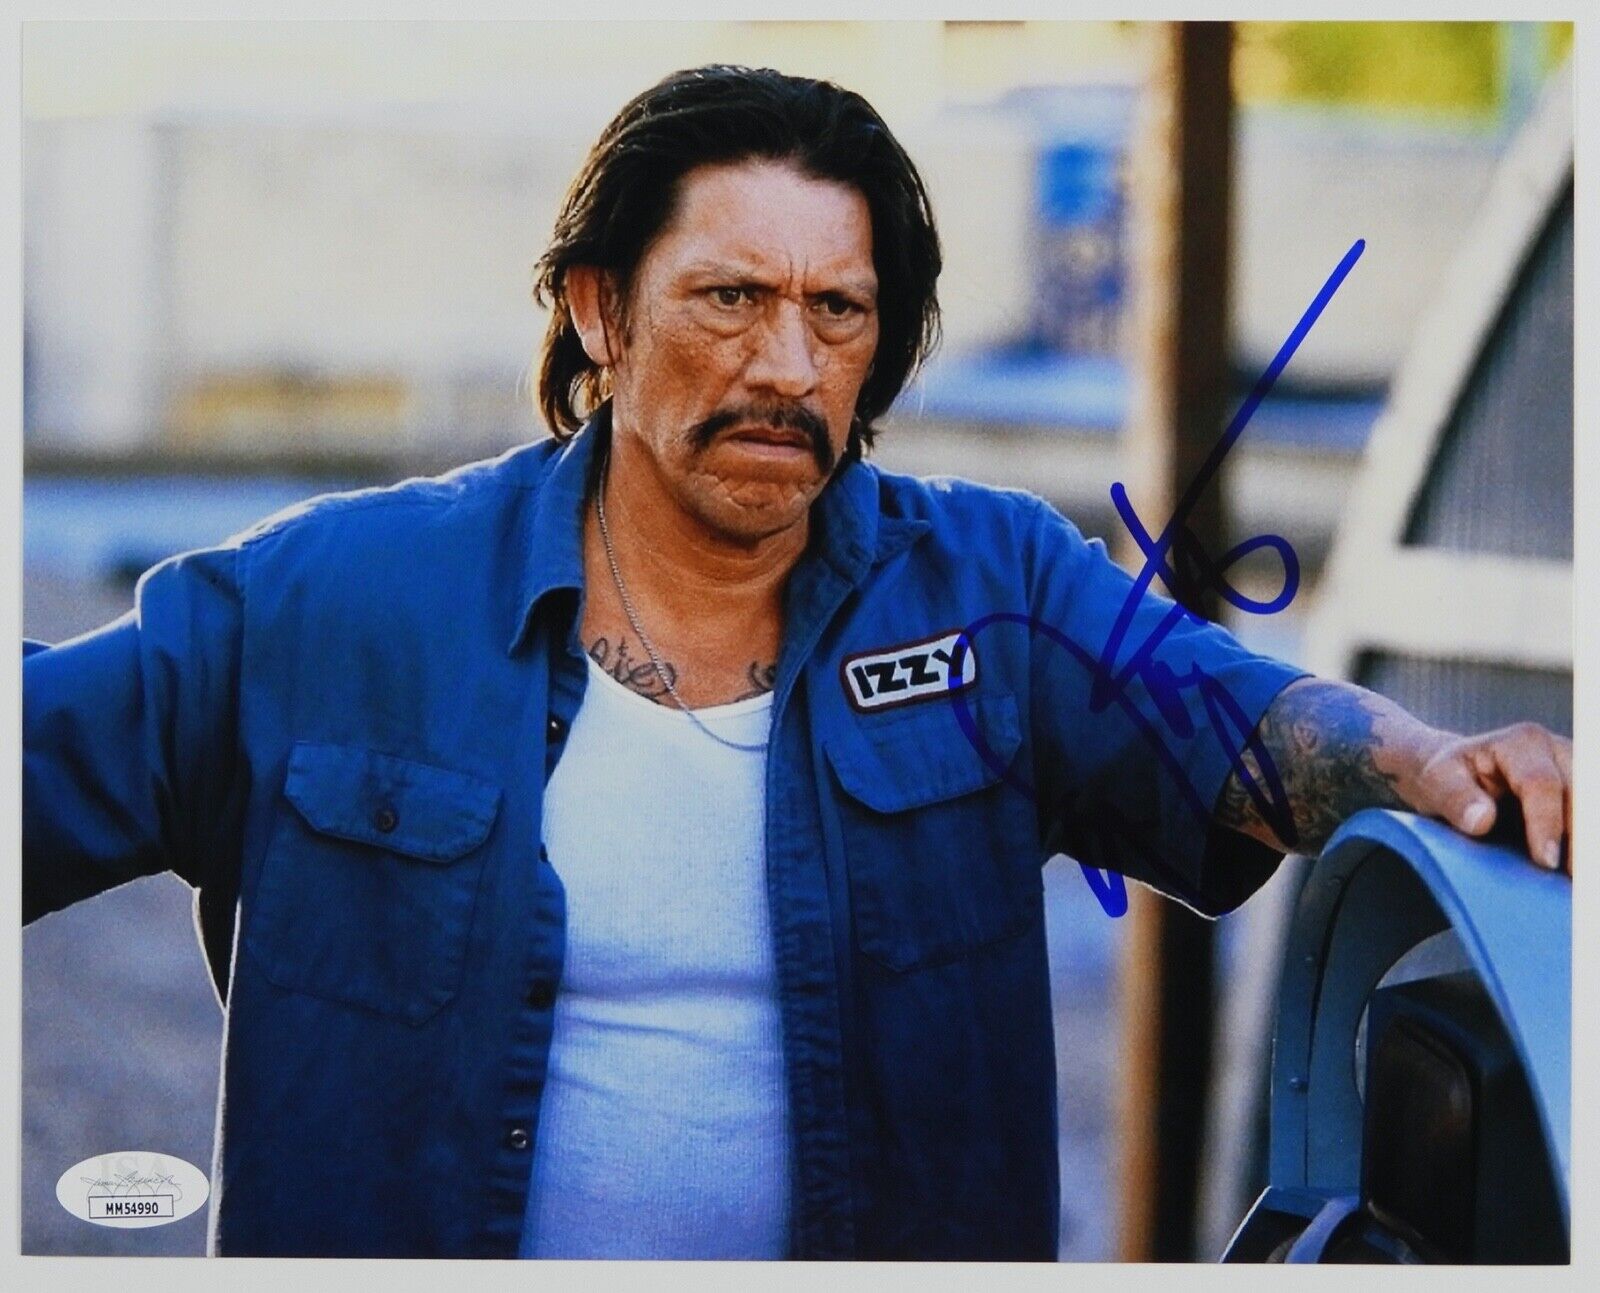 Danny Trejo Autograph JSA 8 x 10 Signed Photo Poster painting